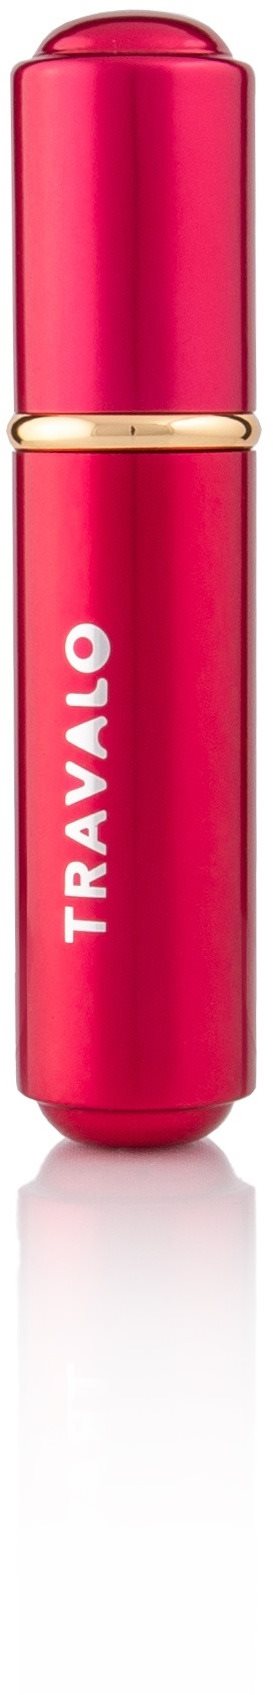 TRAVALO Refill Atomizer Roma Red 5 ml